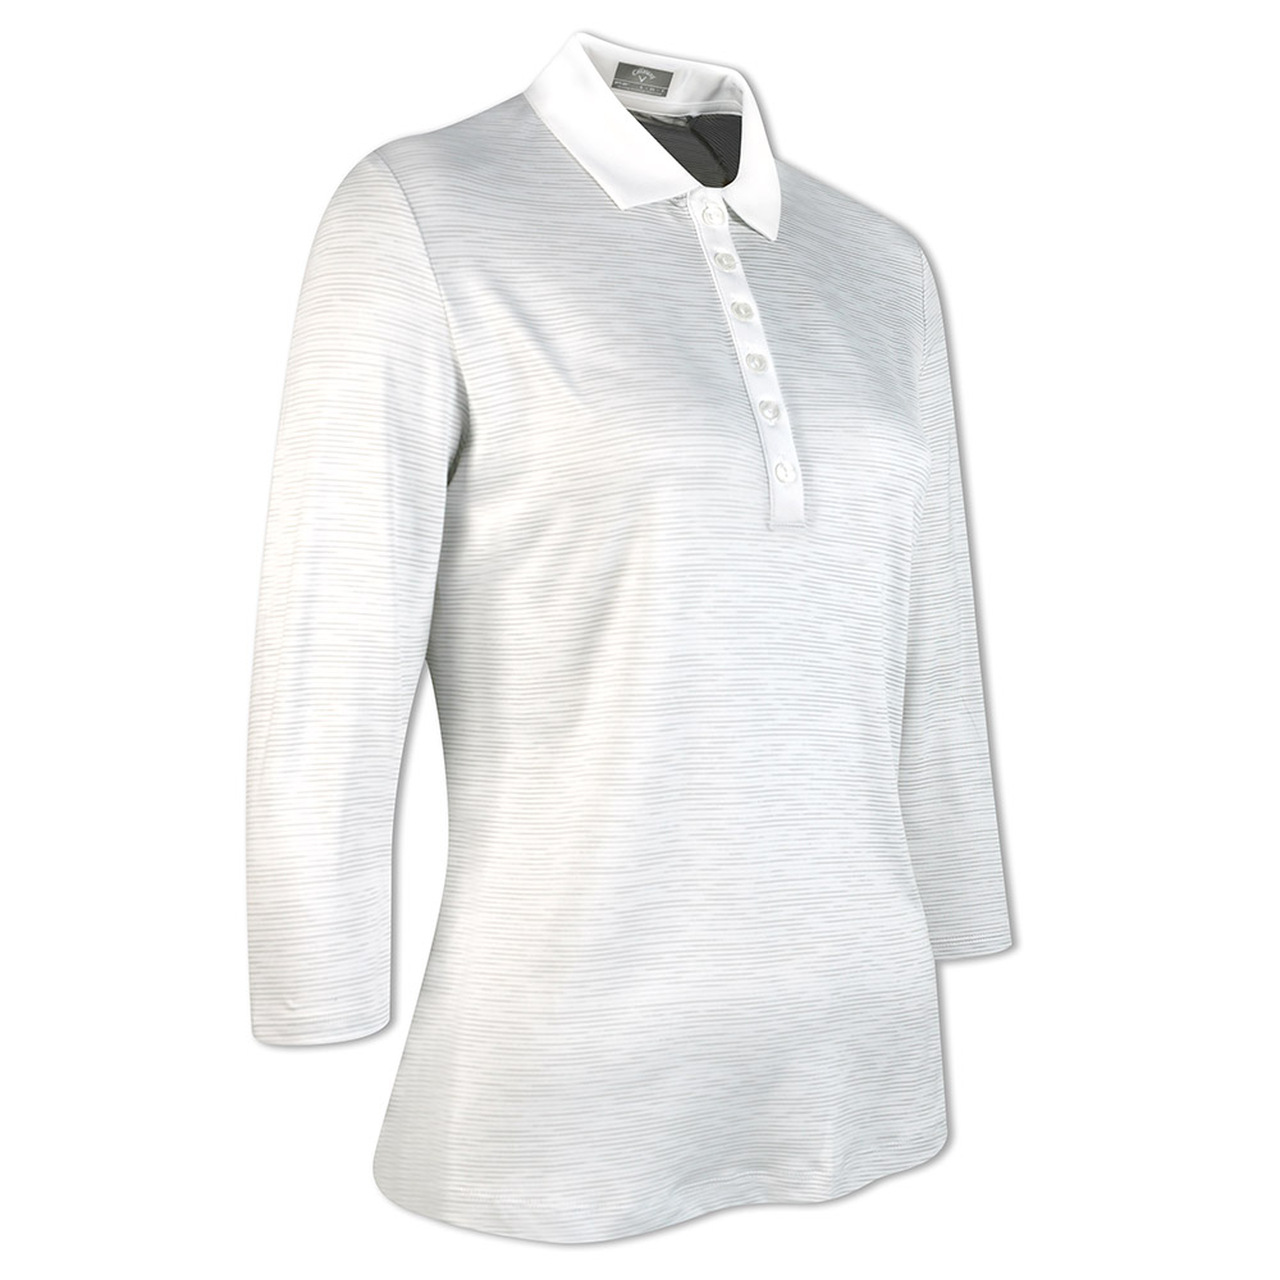 Callaway Space Dye Jersey dámské triko s 3/4 rukávem, bílé, vel. XL